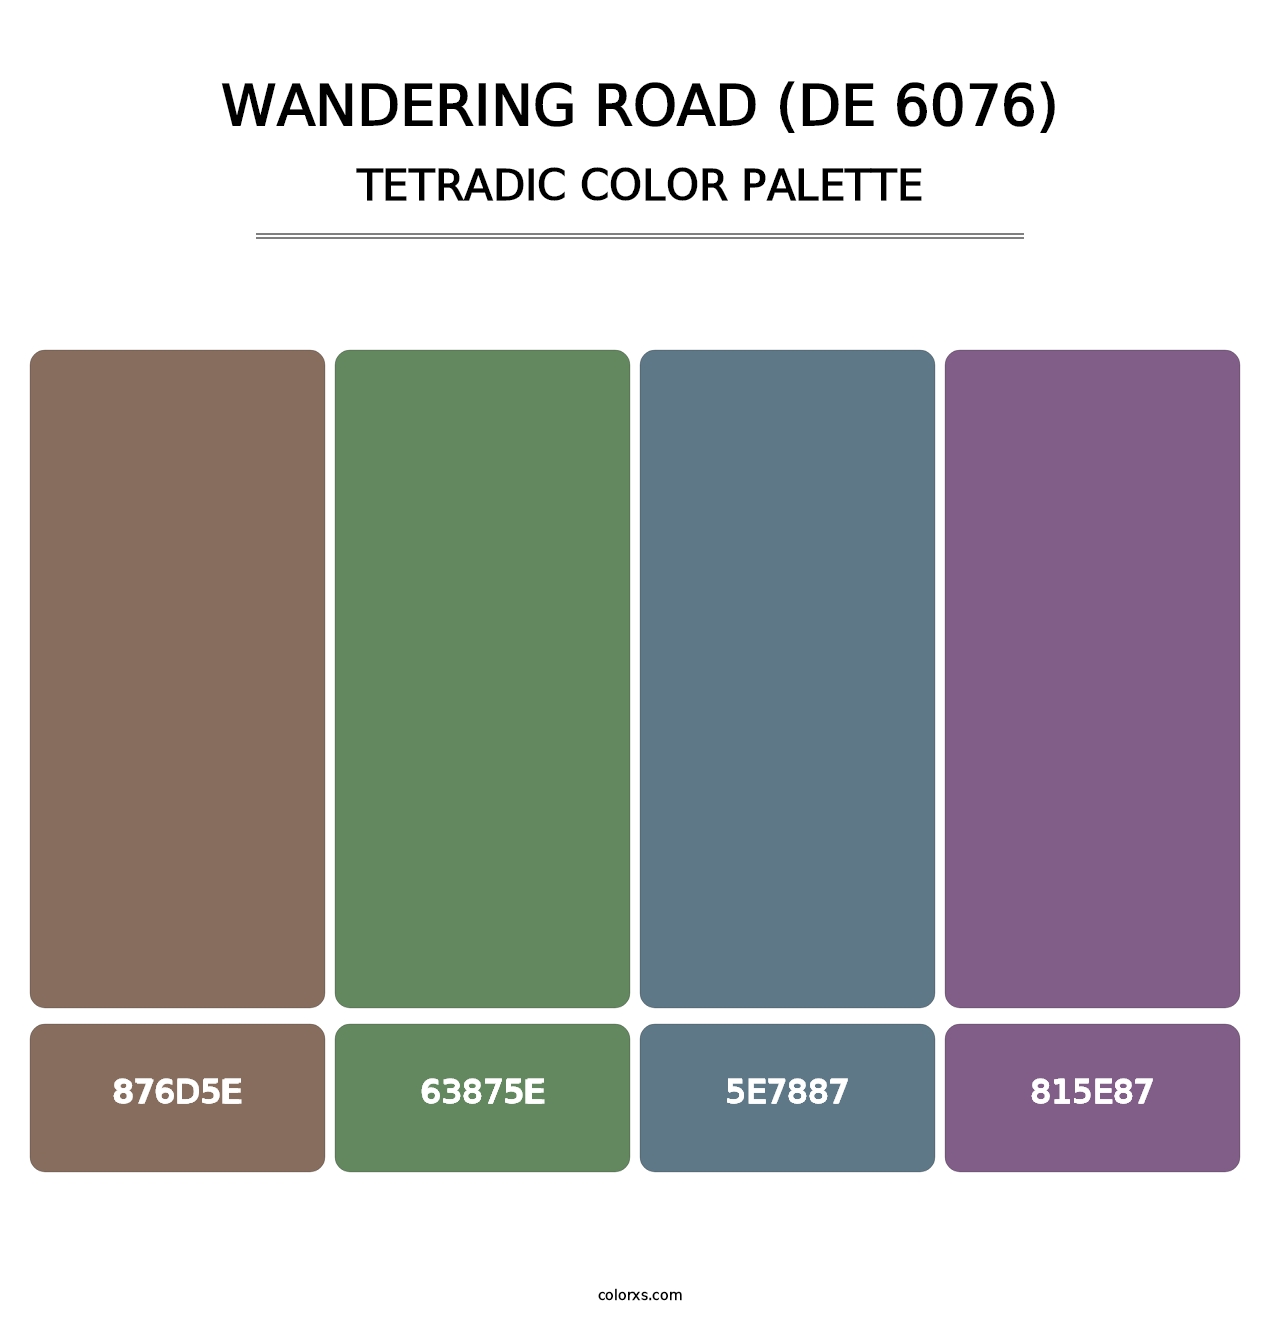 Wandering Road (DE 6076) - Tetradic Color Palette